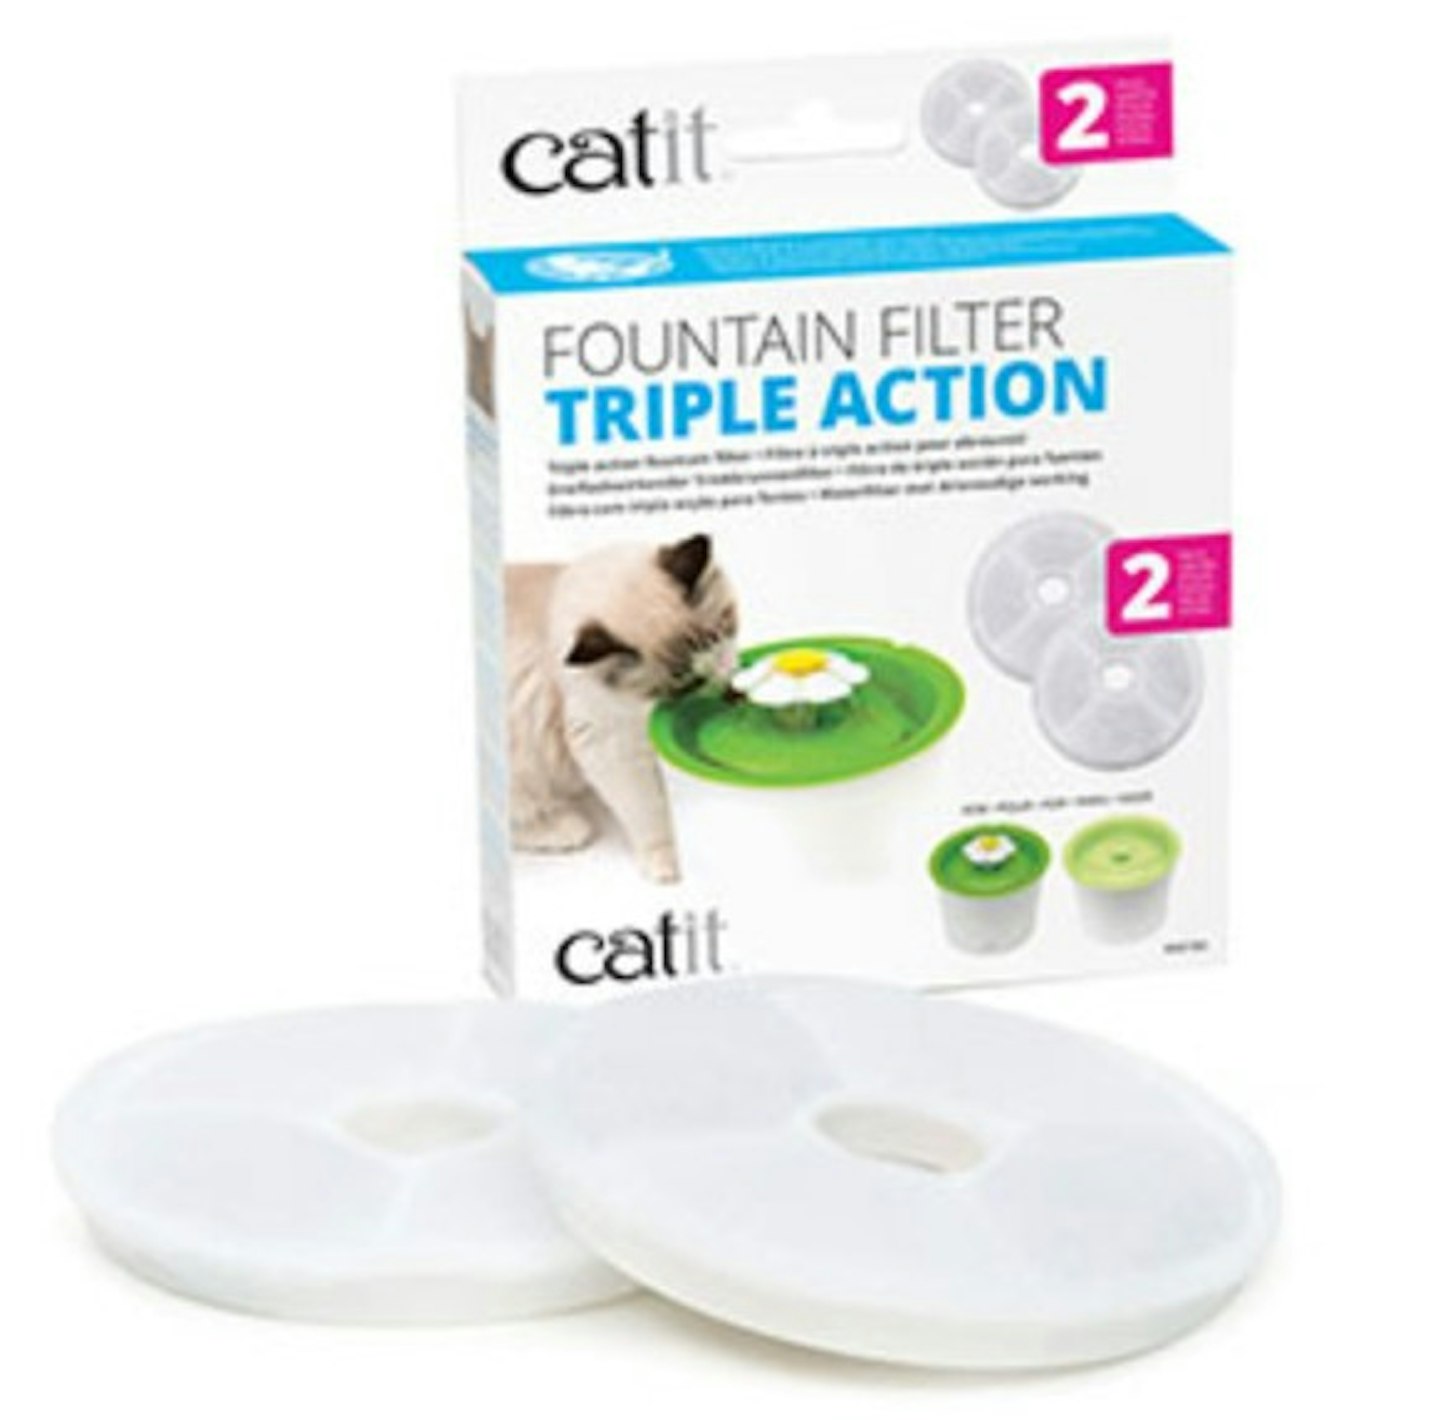 Catit 2.0 Cat Water Fountain Filter Cartridge (2 Pack)